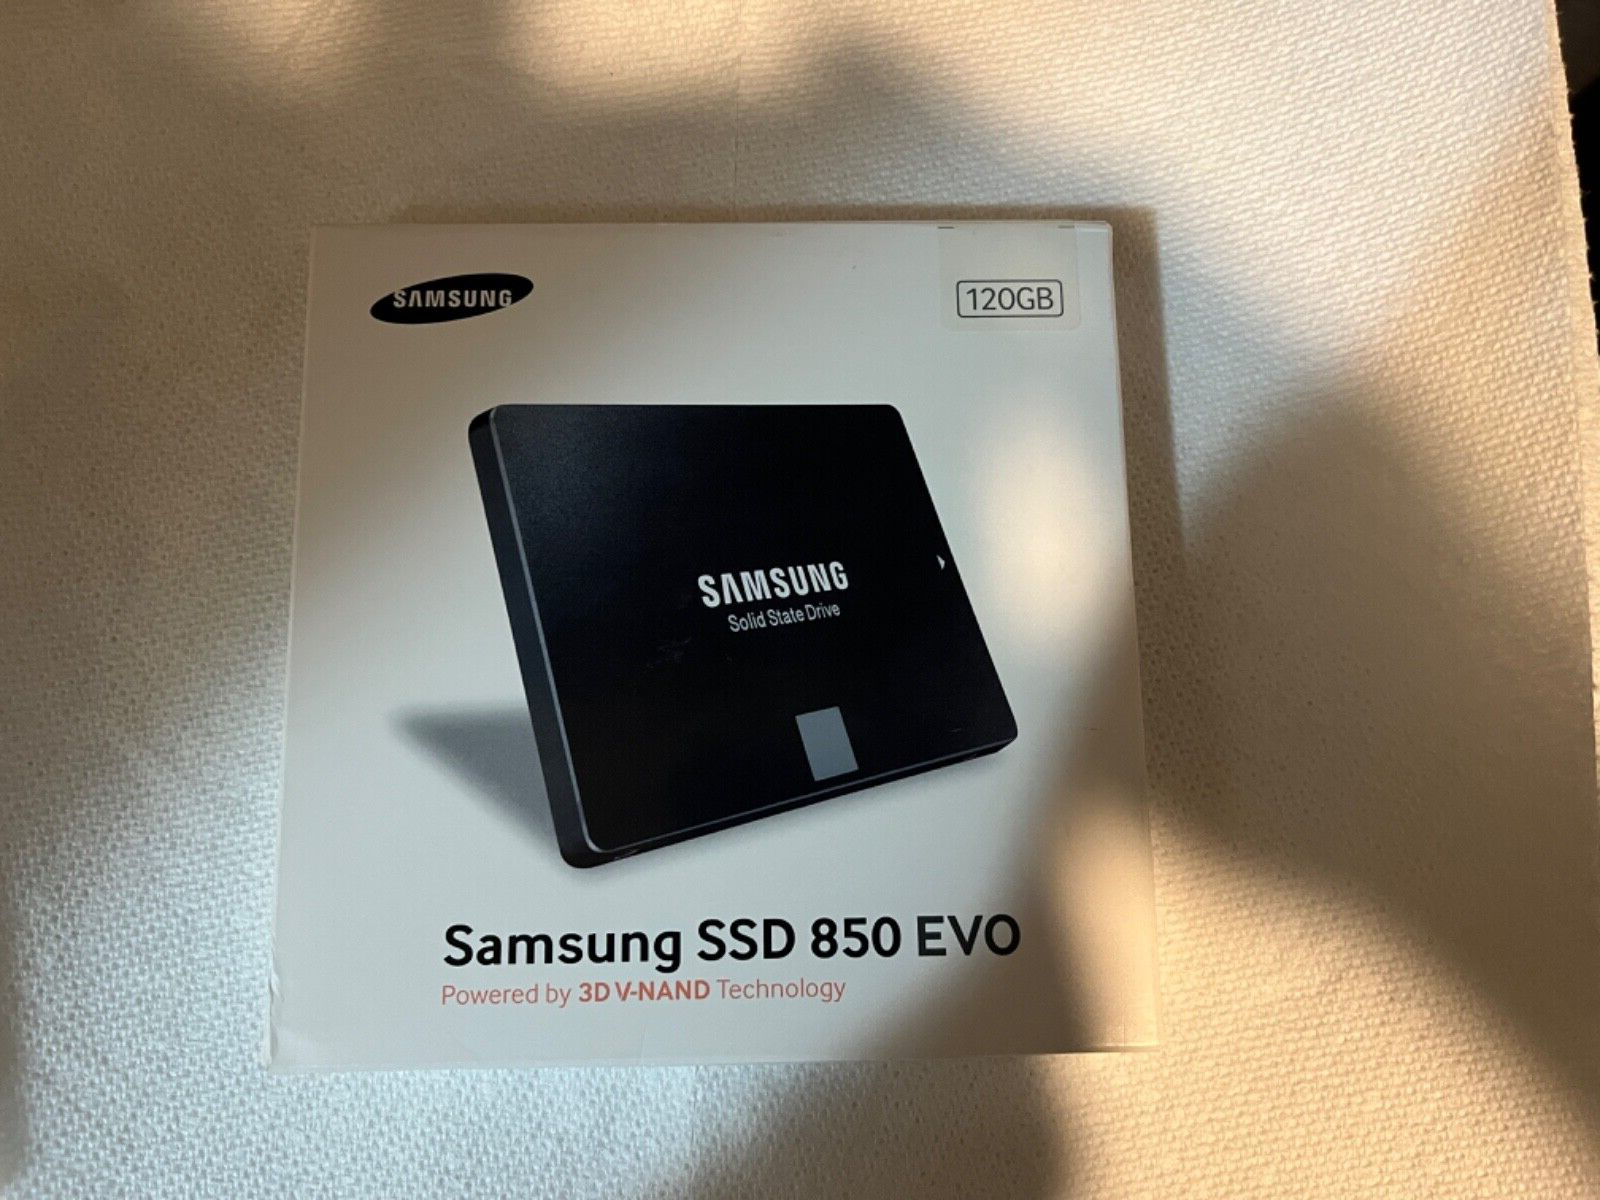 Samsung SSD 850 EVO SATA III 6Gb/s 120GB SSD Model : MZ-75E120 FACTORY SEALED